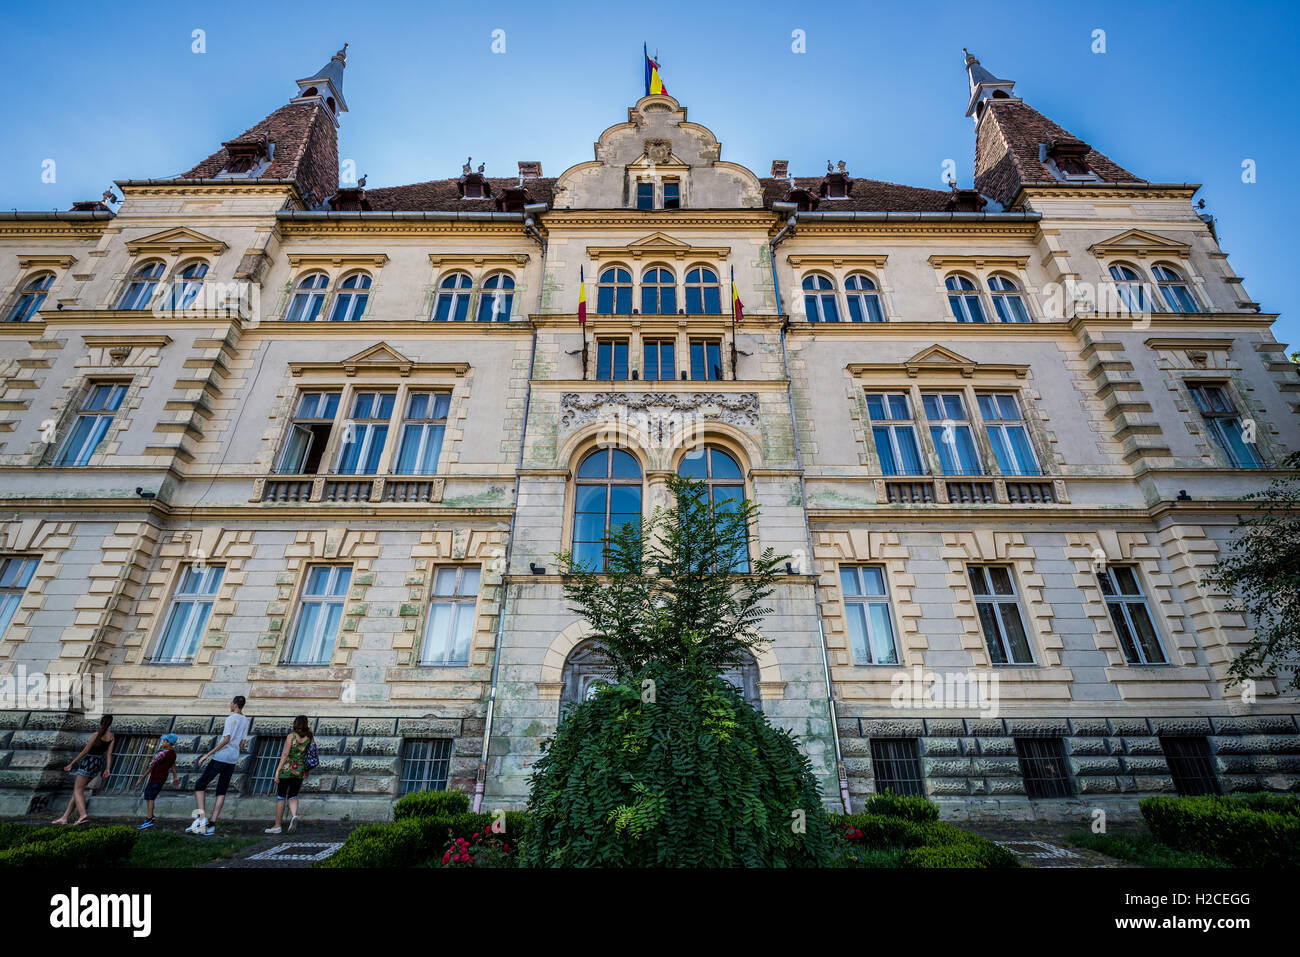 Building of City Hall from 19th century in Historic Centre of Sighisoara city, Transylvania region in Romania Stock Photo